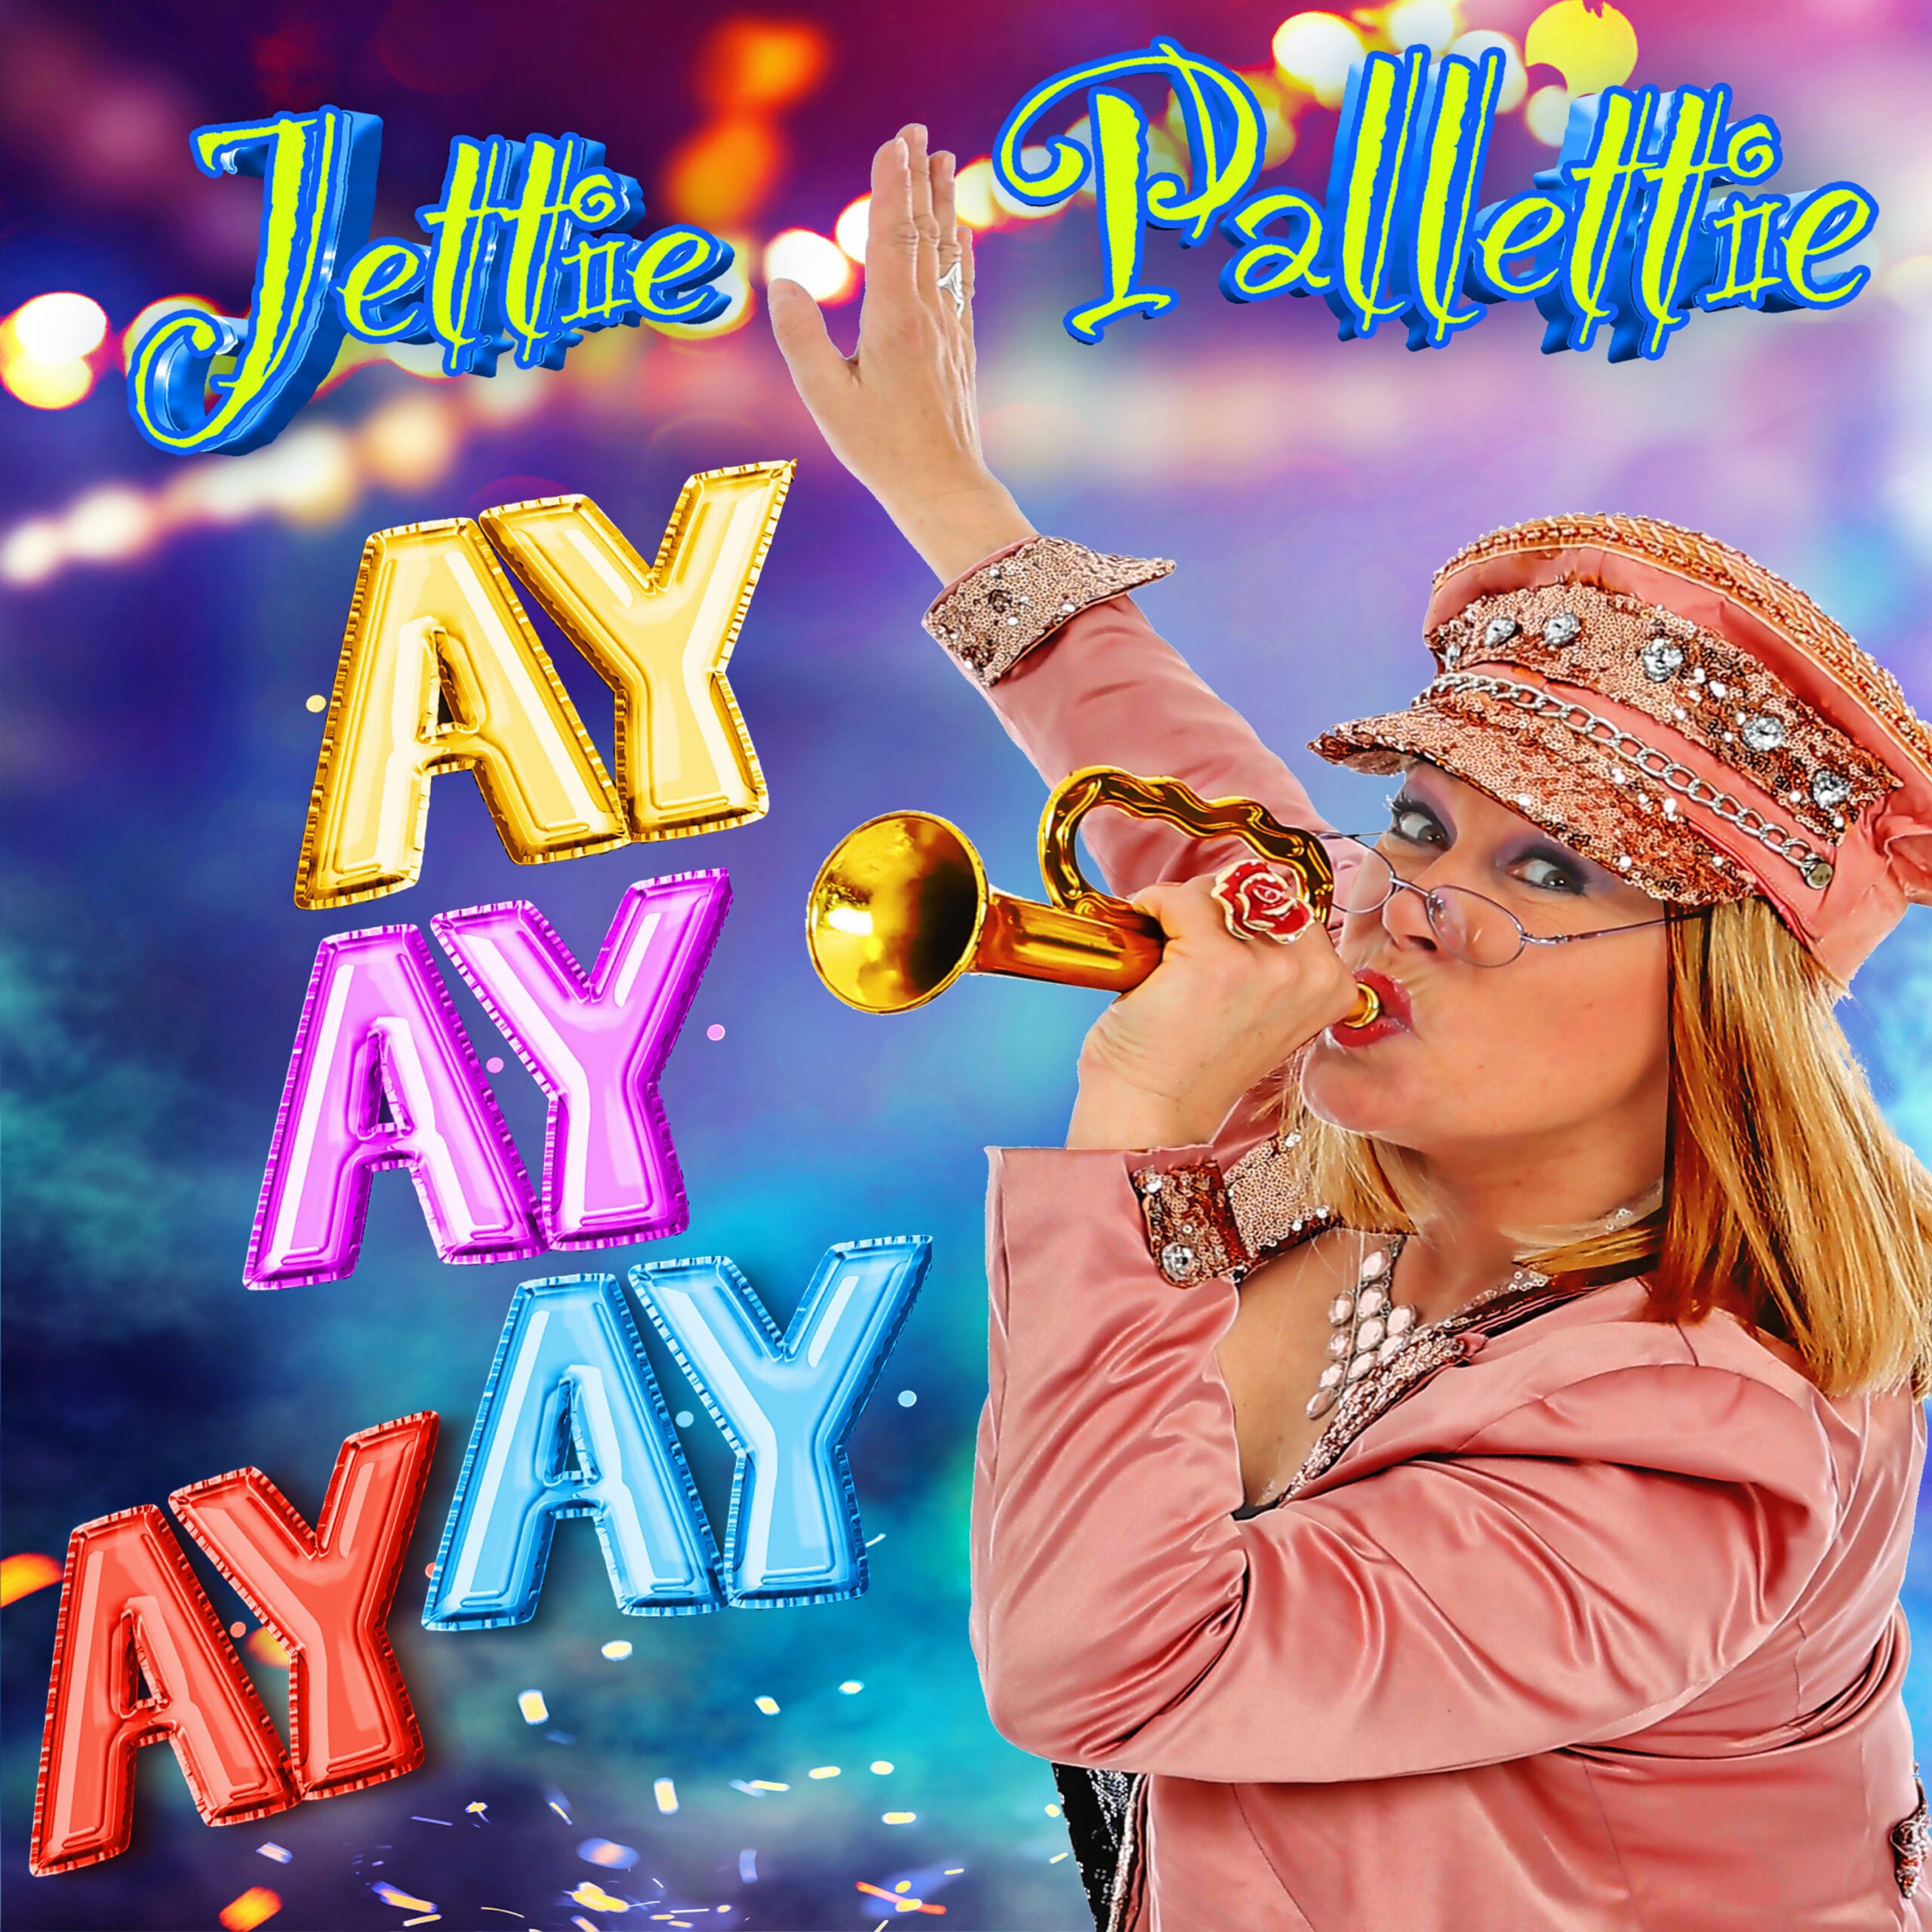 Jettie Pallettie